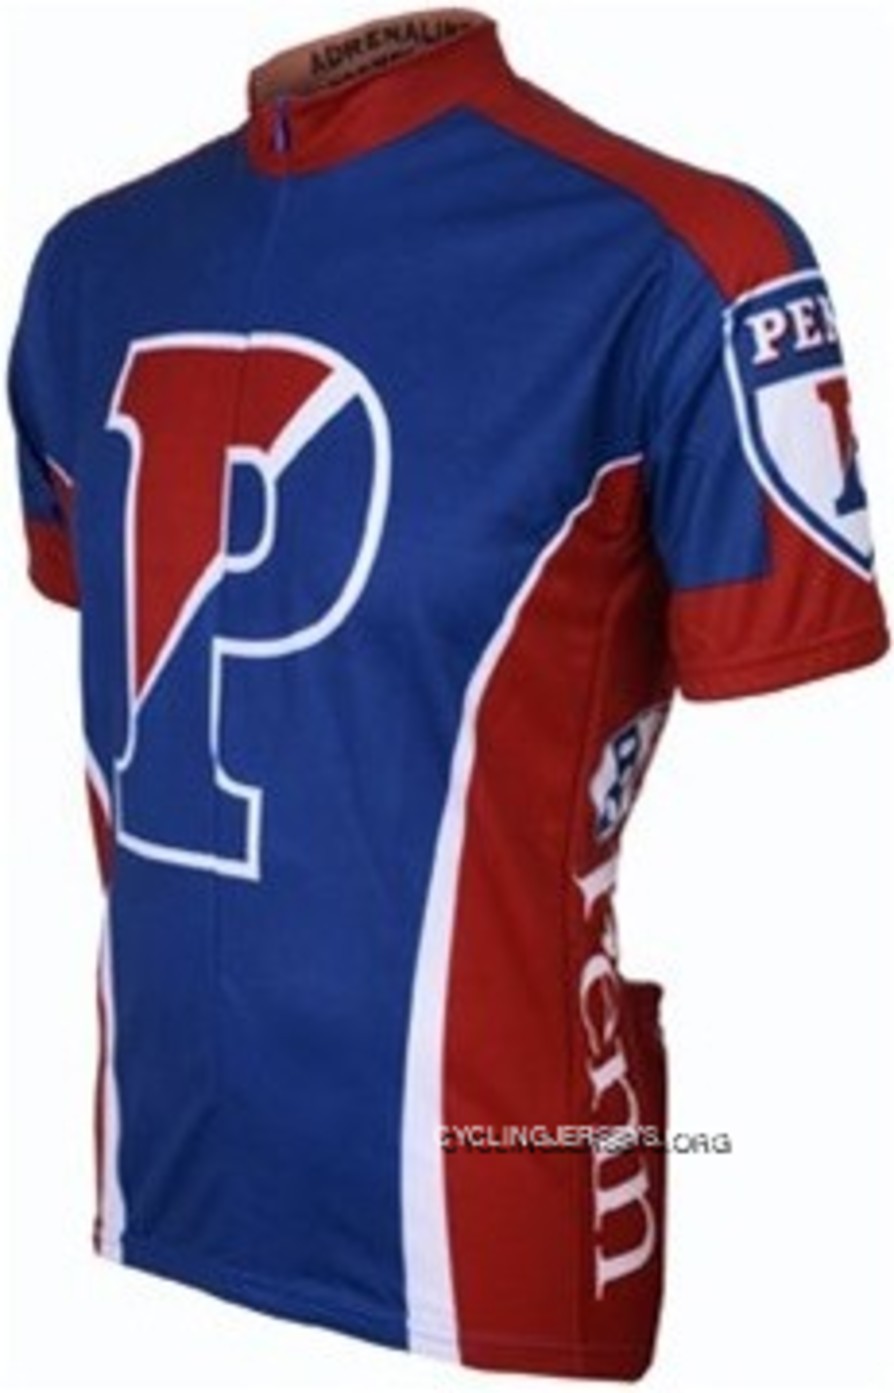 University Of Pennsylvania Cycling Short Sleeve Jersey New Style